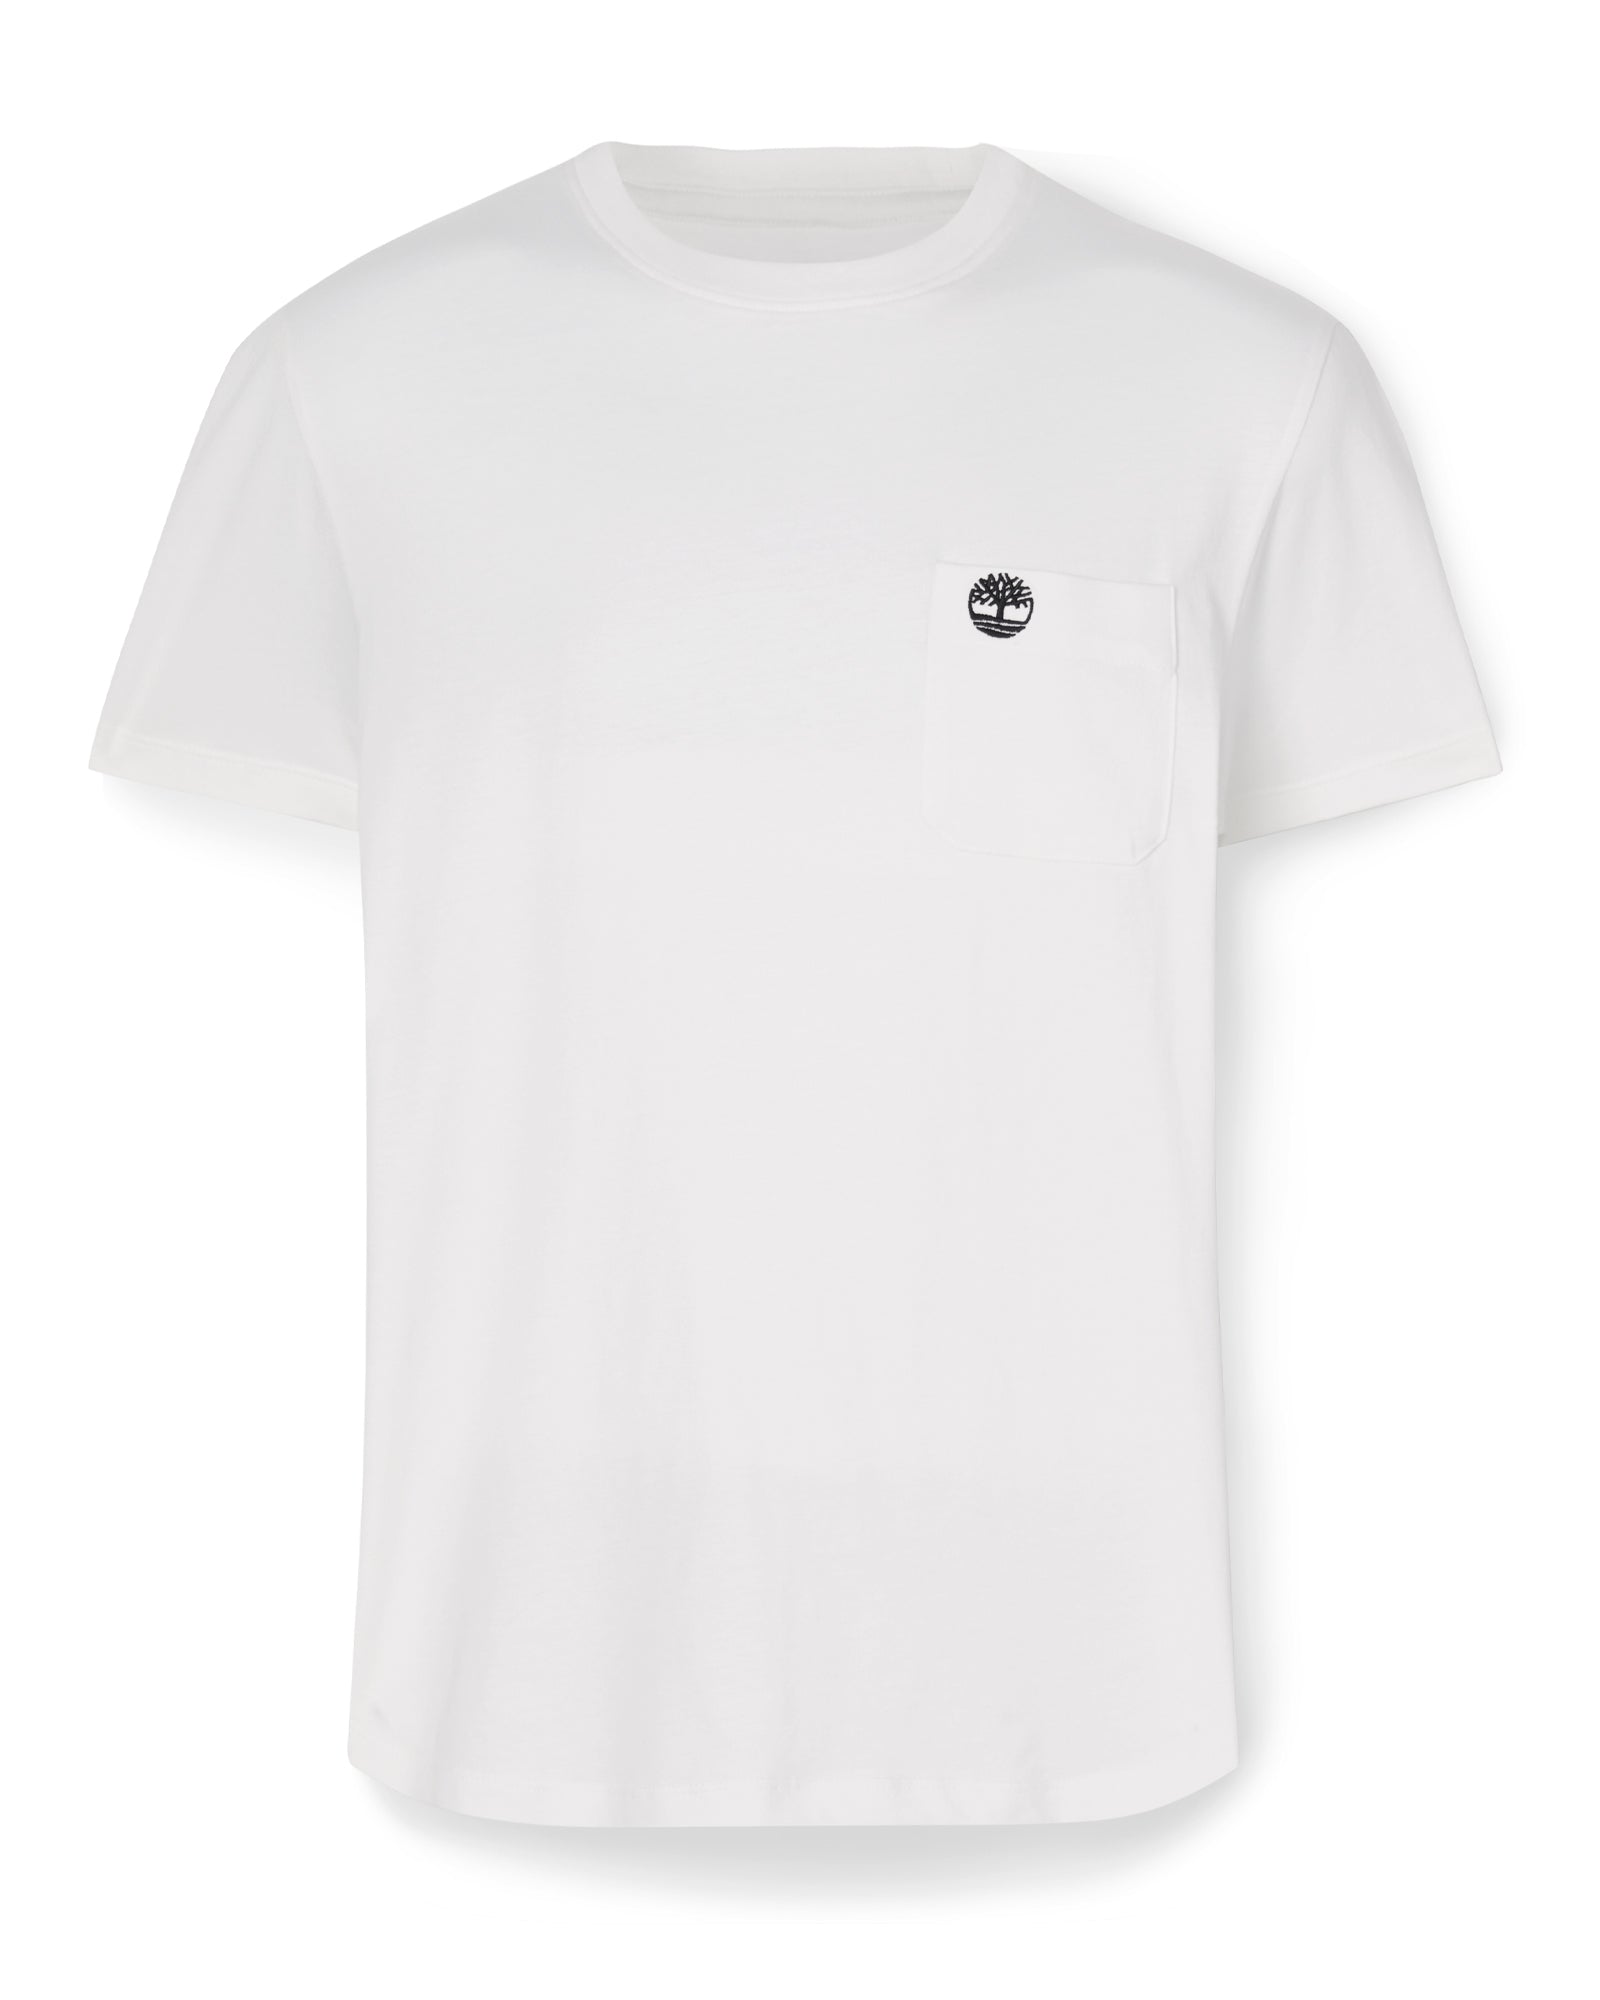 Timberland Dunstan River Pocket t-paita - Valkoinen